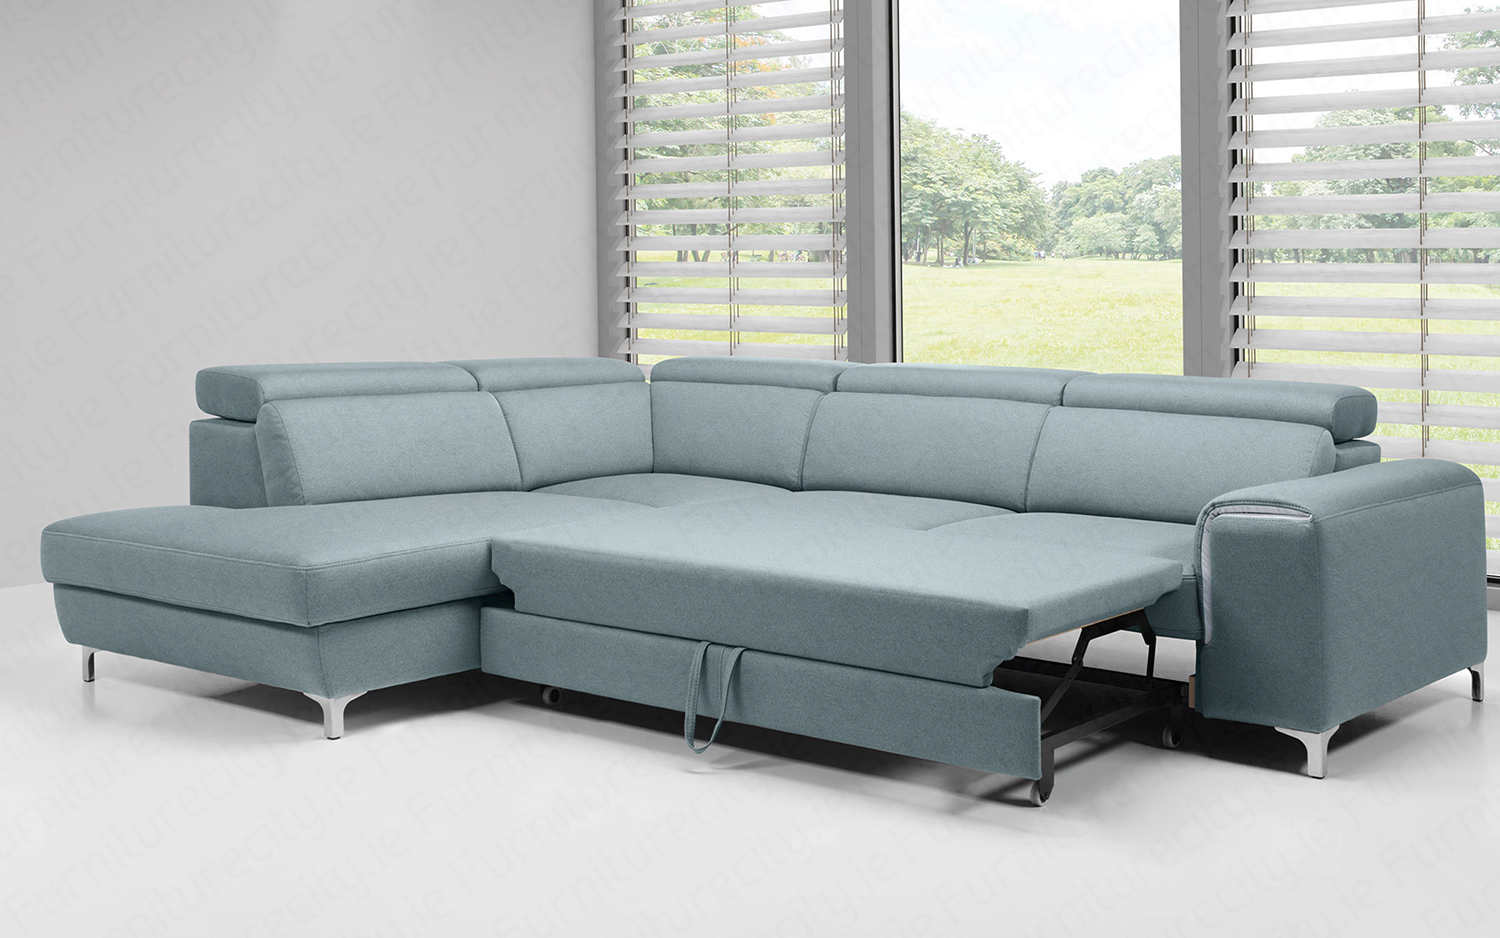 Sofa bed GENOA OPEN by Furniturecity.ie